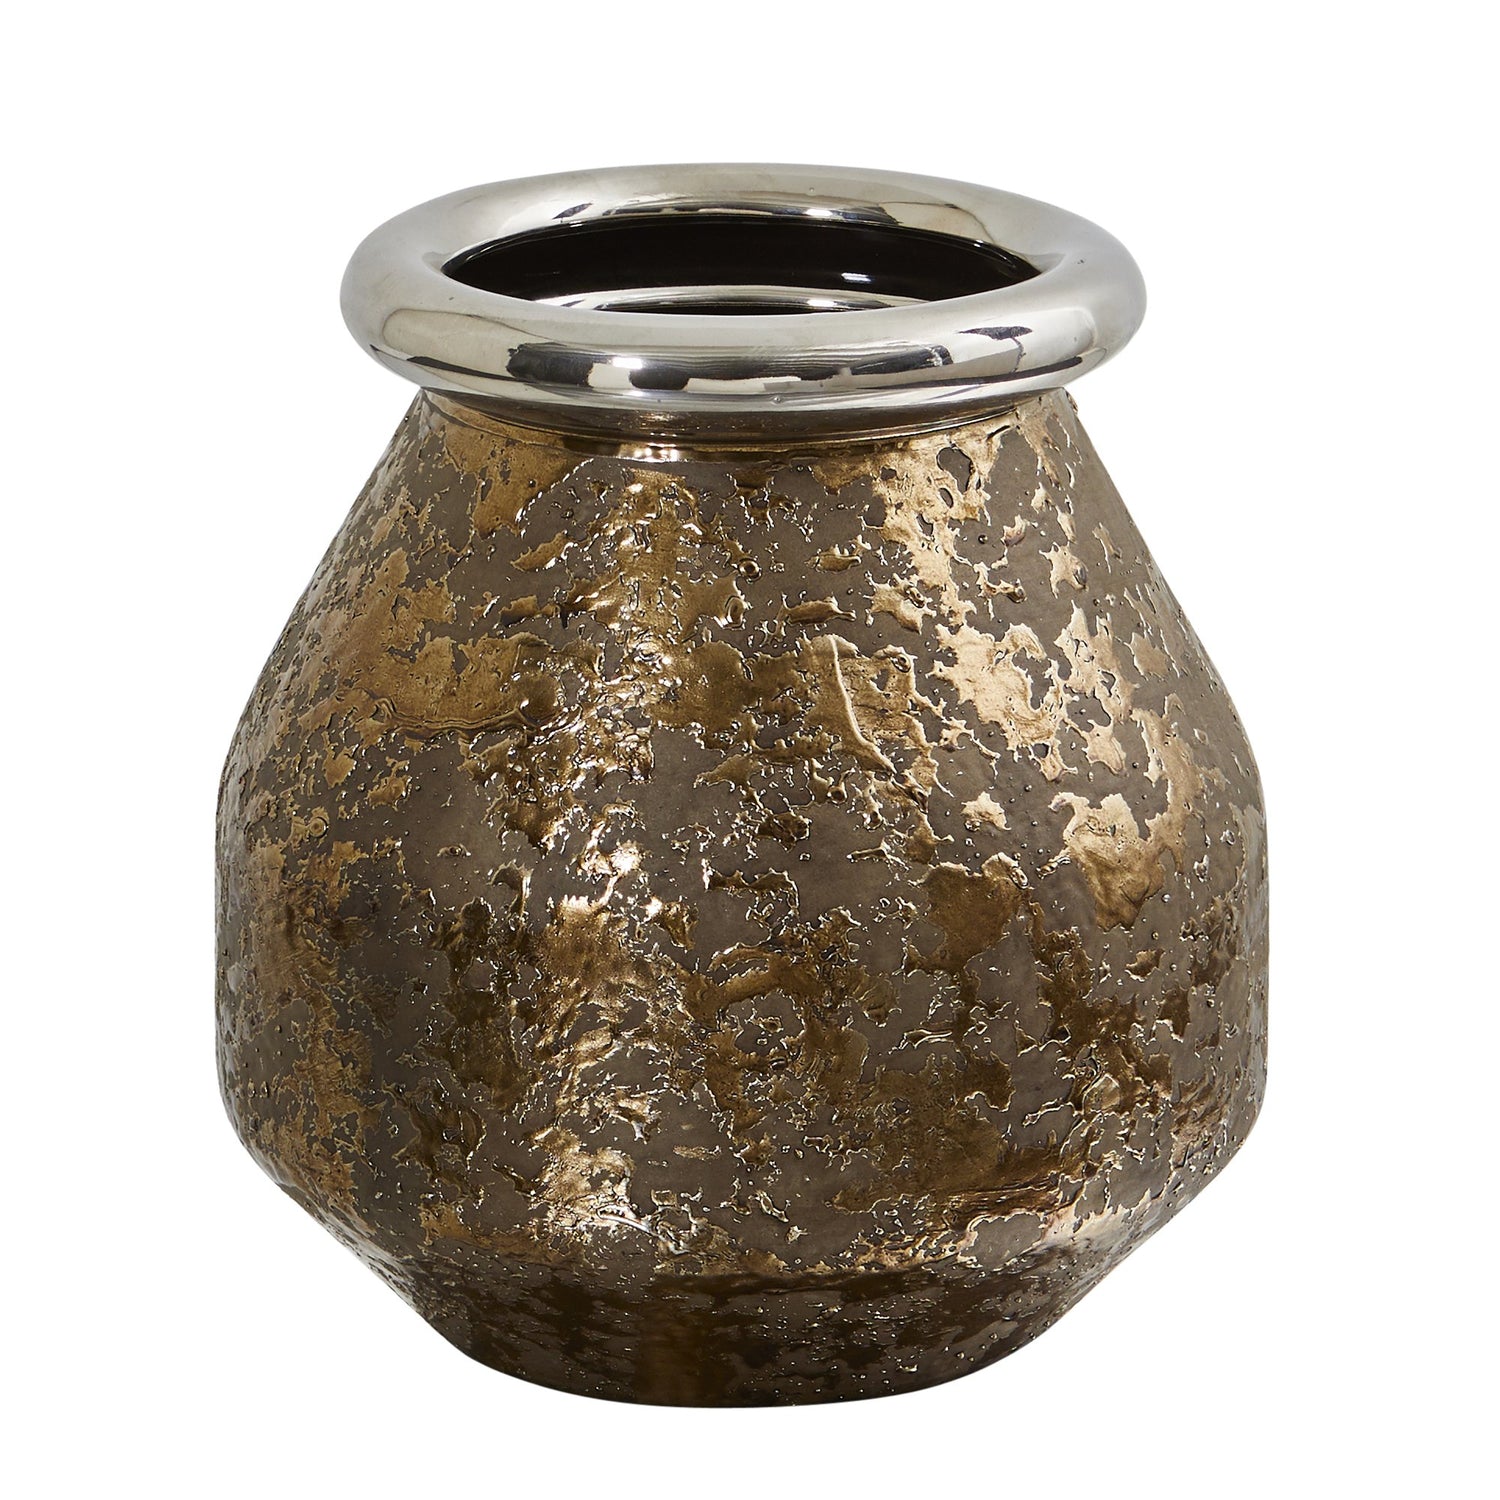 9.5” Textured Bronze Vase with Silver Rim